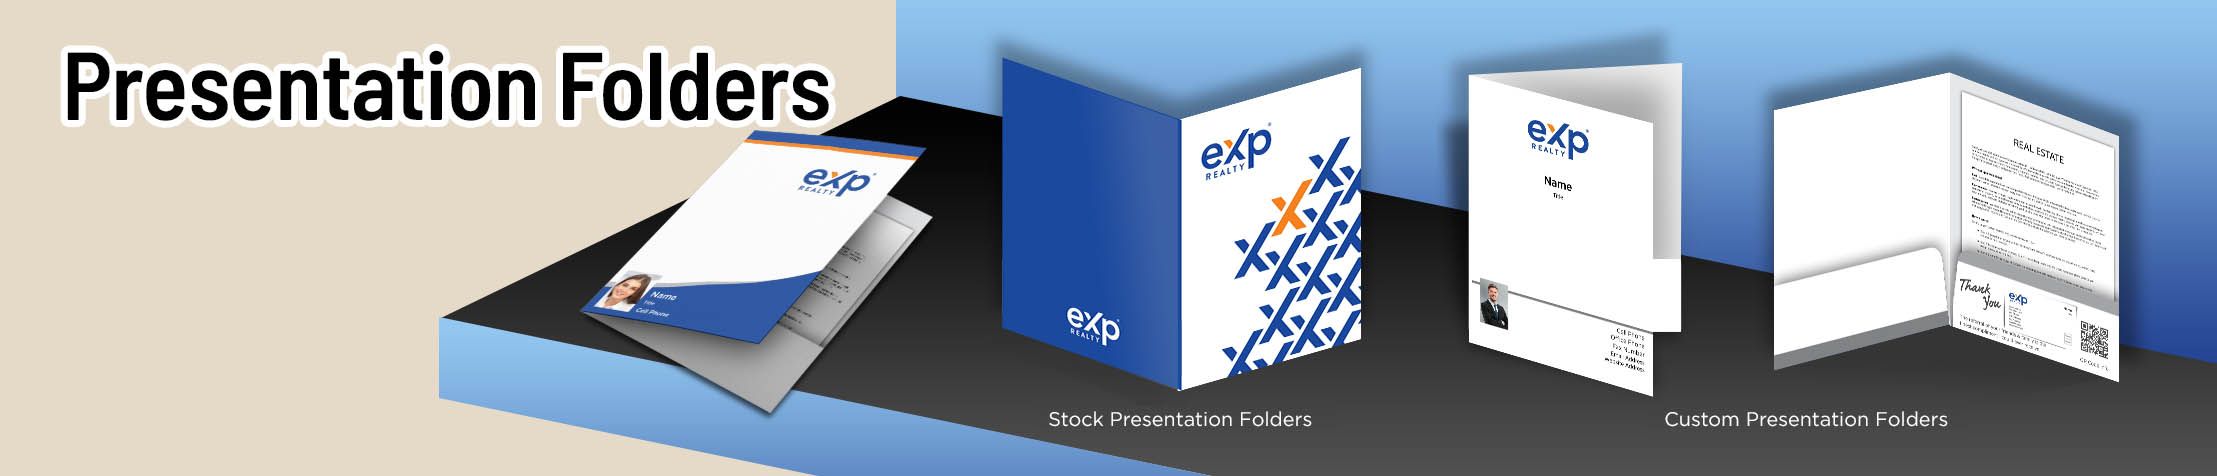 eXp Realty Real Estate Presentation Folders -  folders | SparkPrint.com